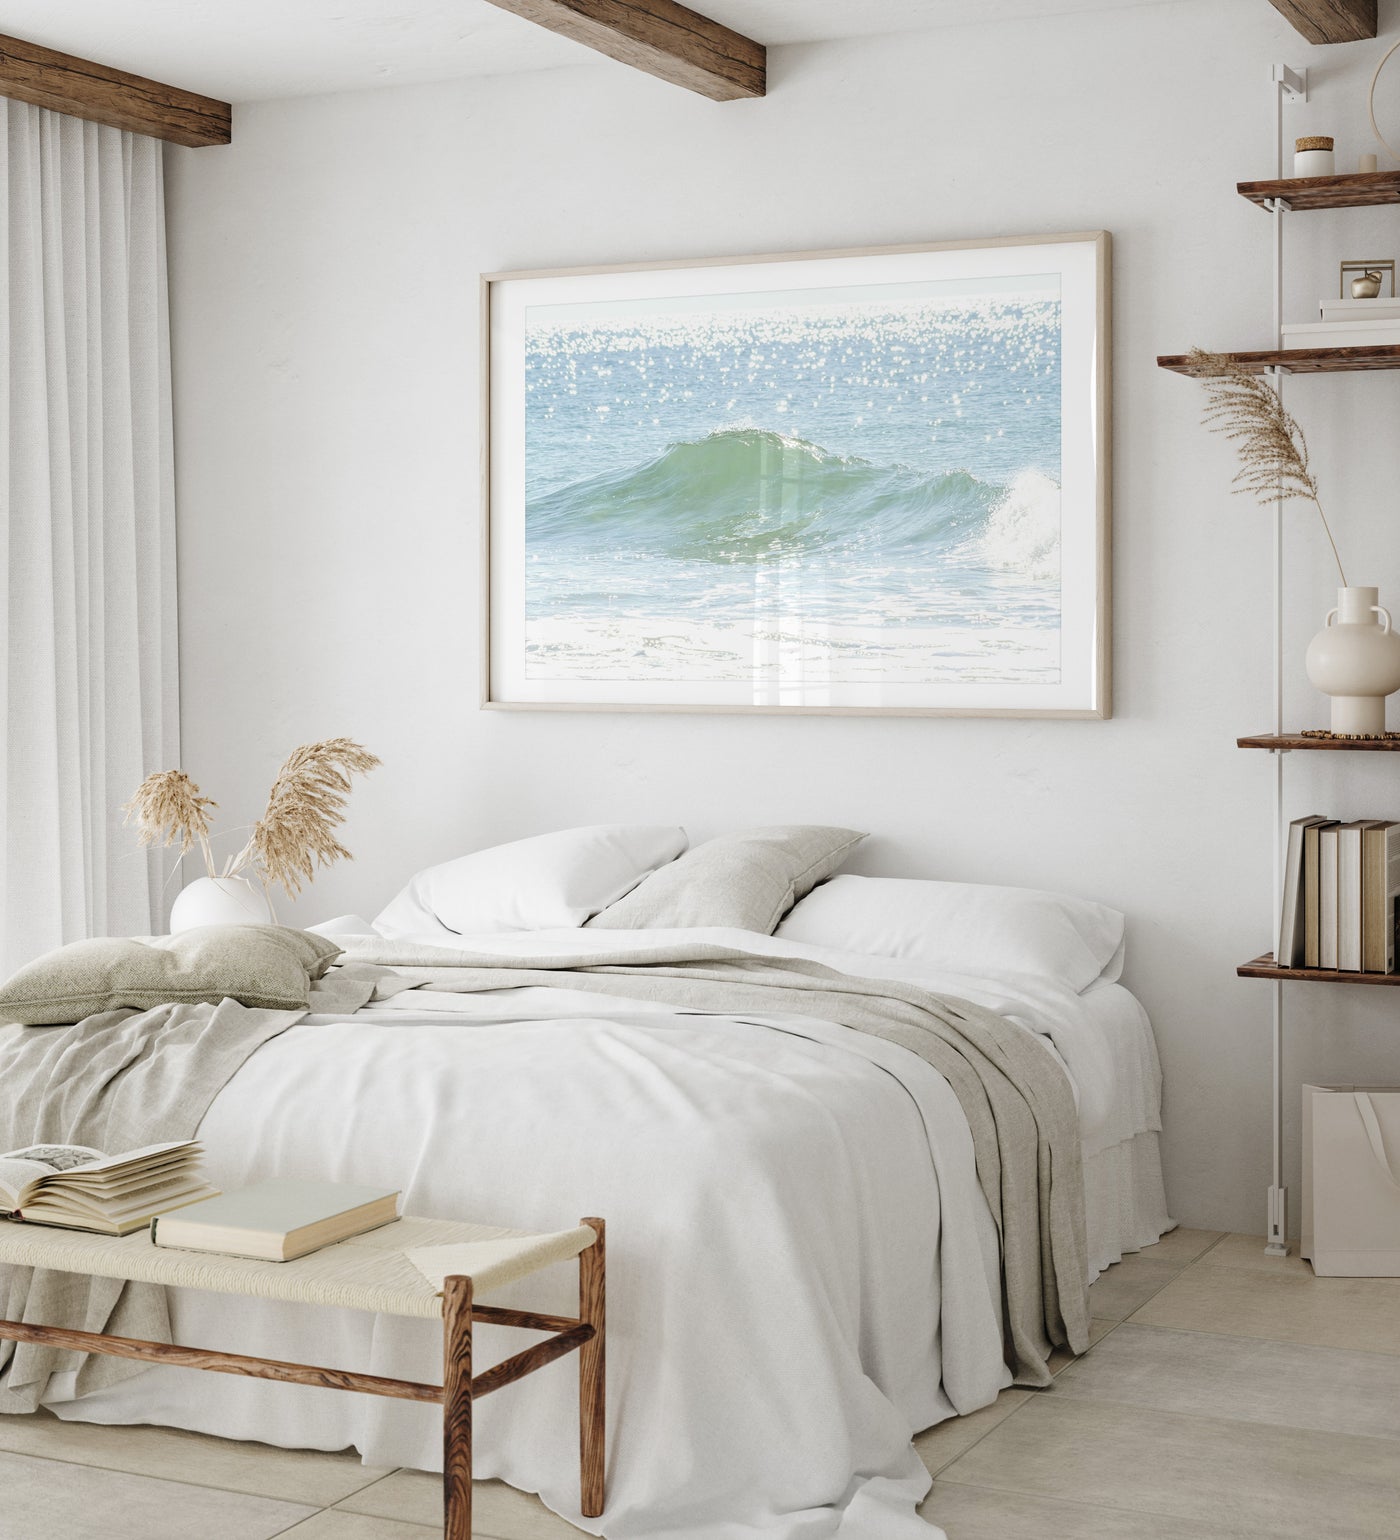 Ocean Waves No 12 - Fine art print by Cattie Coyle Photography in bedroom